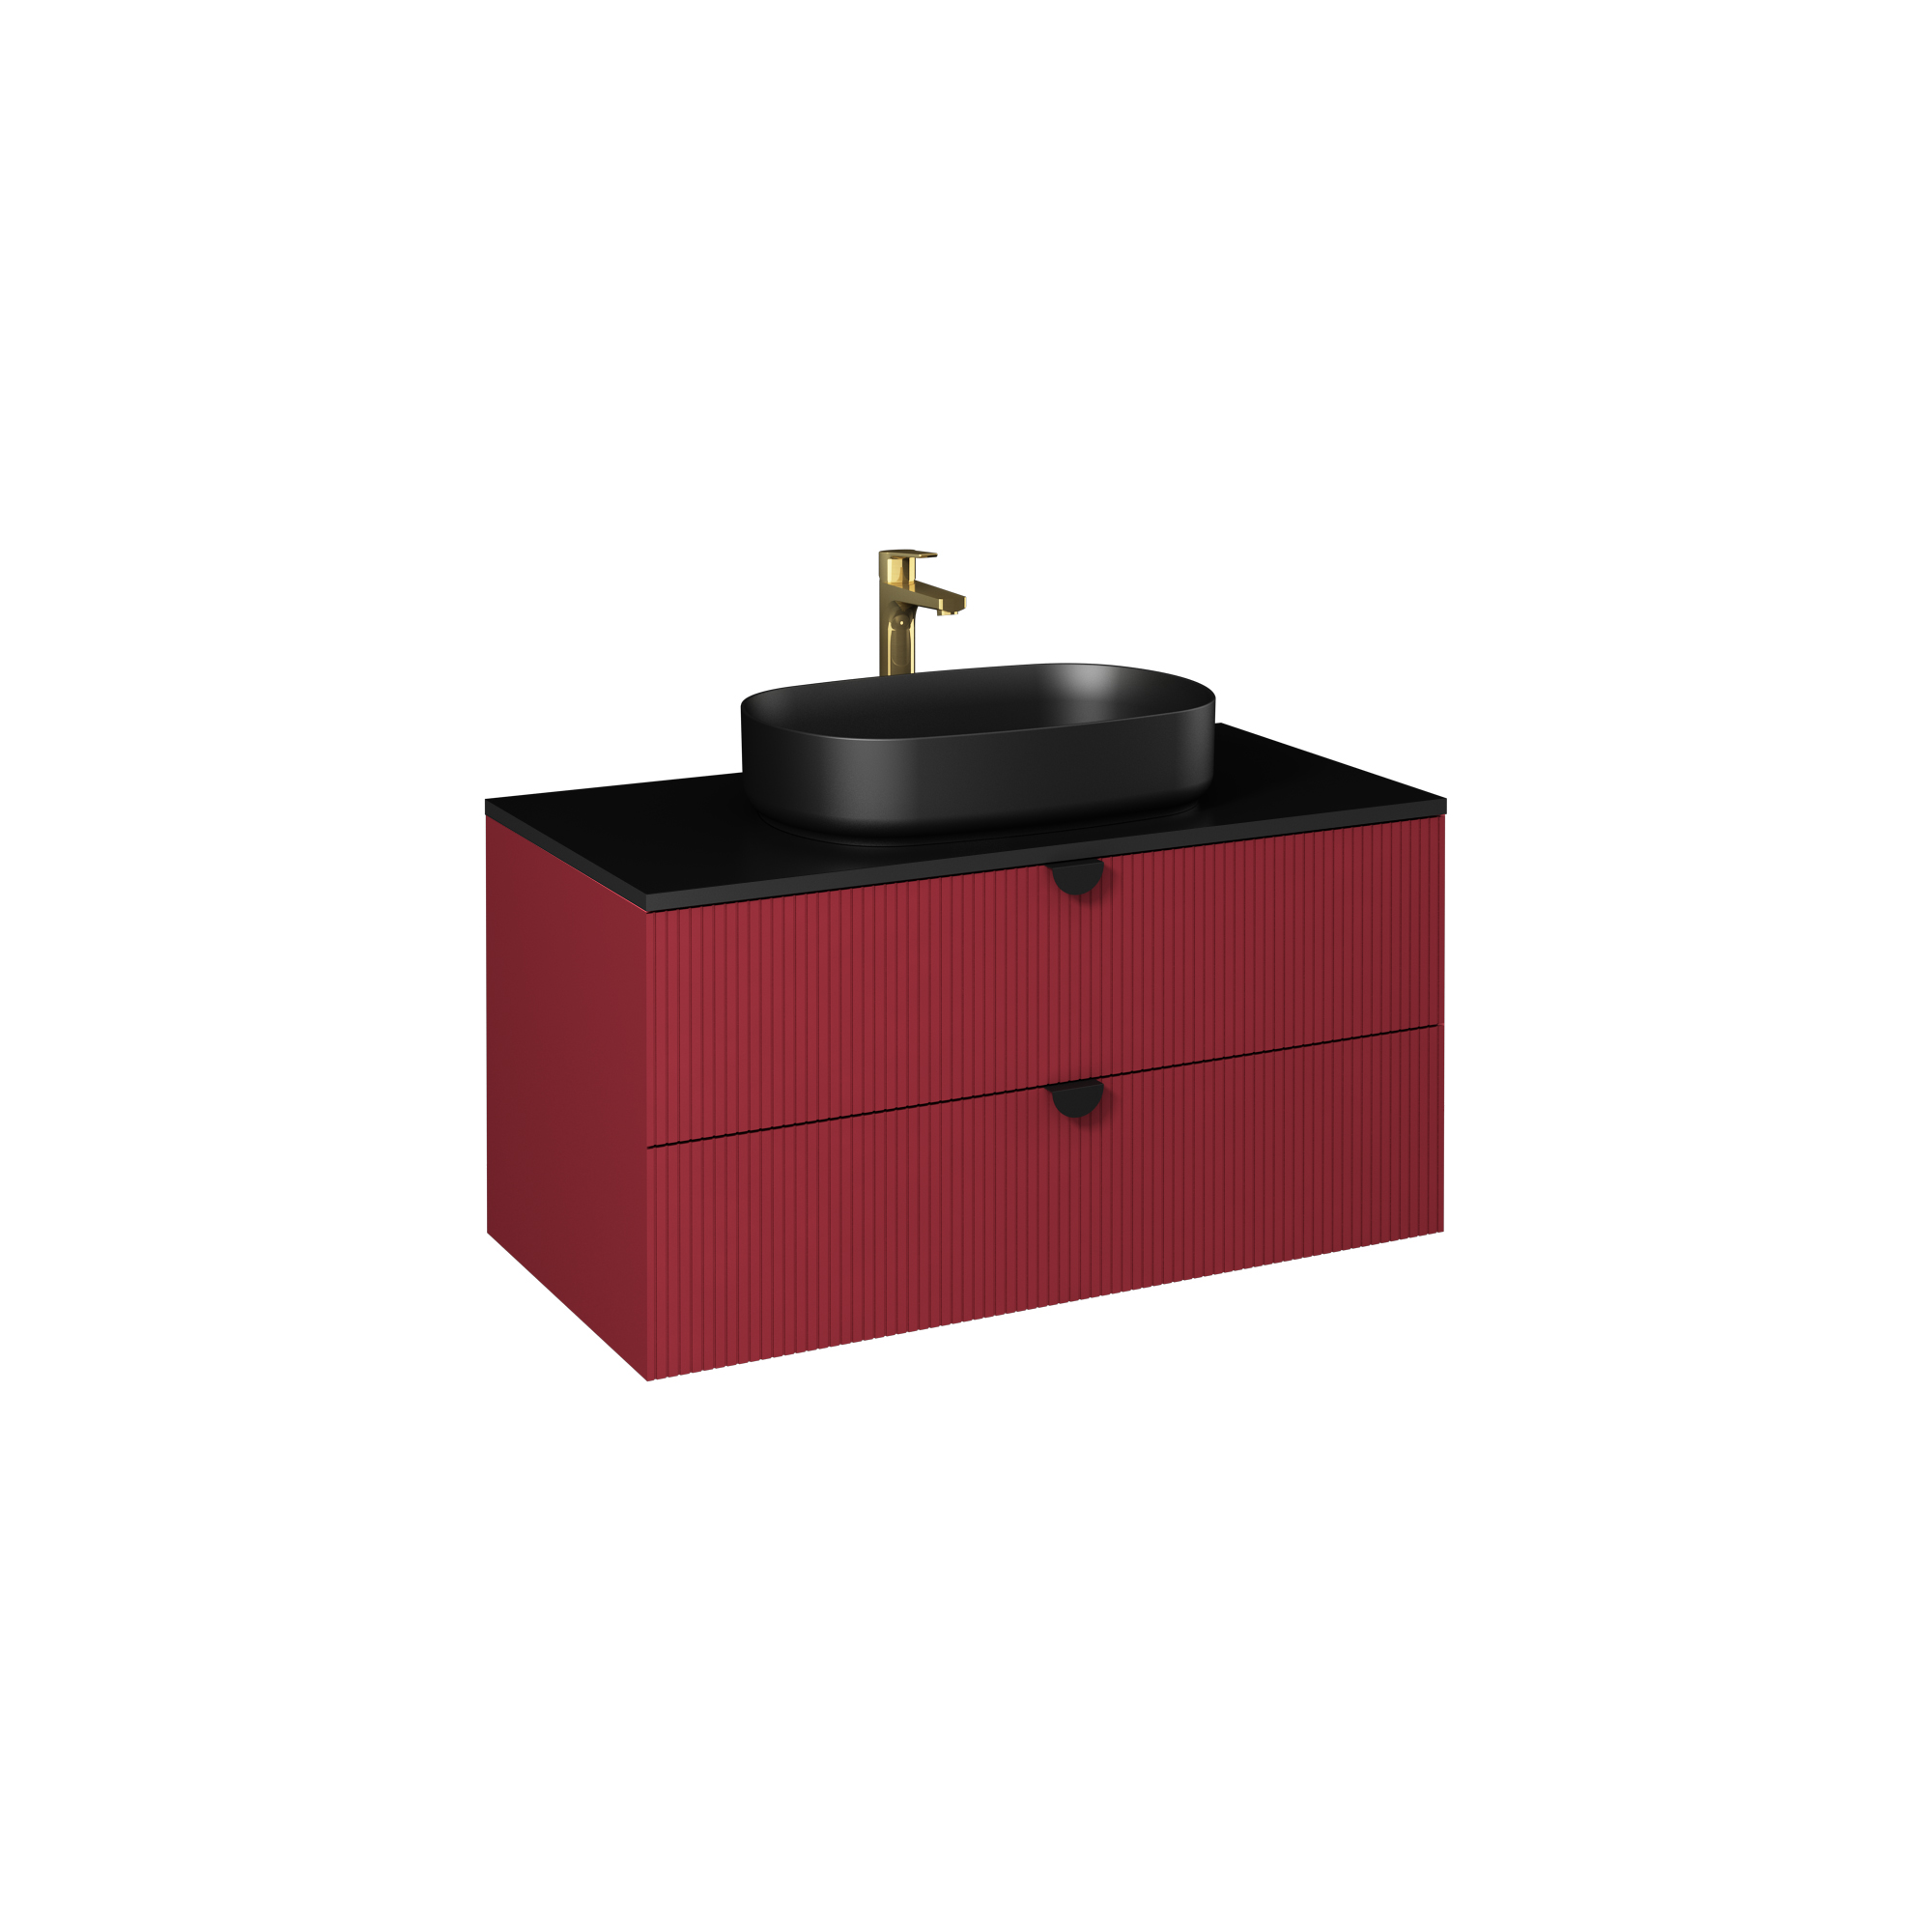 Infinity Washbasin Cabinet, Ruby Red, with White Washbasin 130 cm